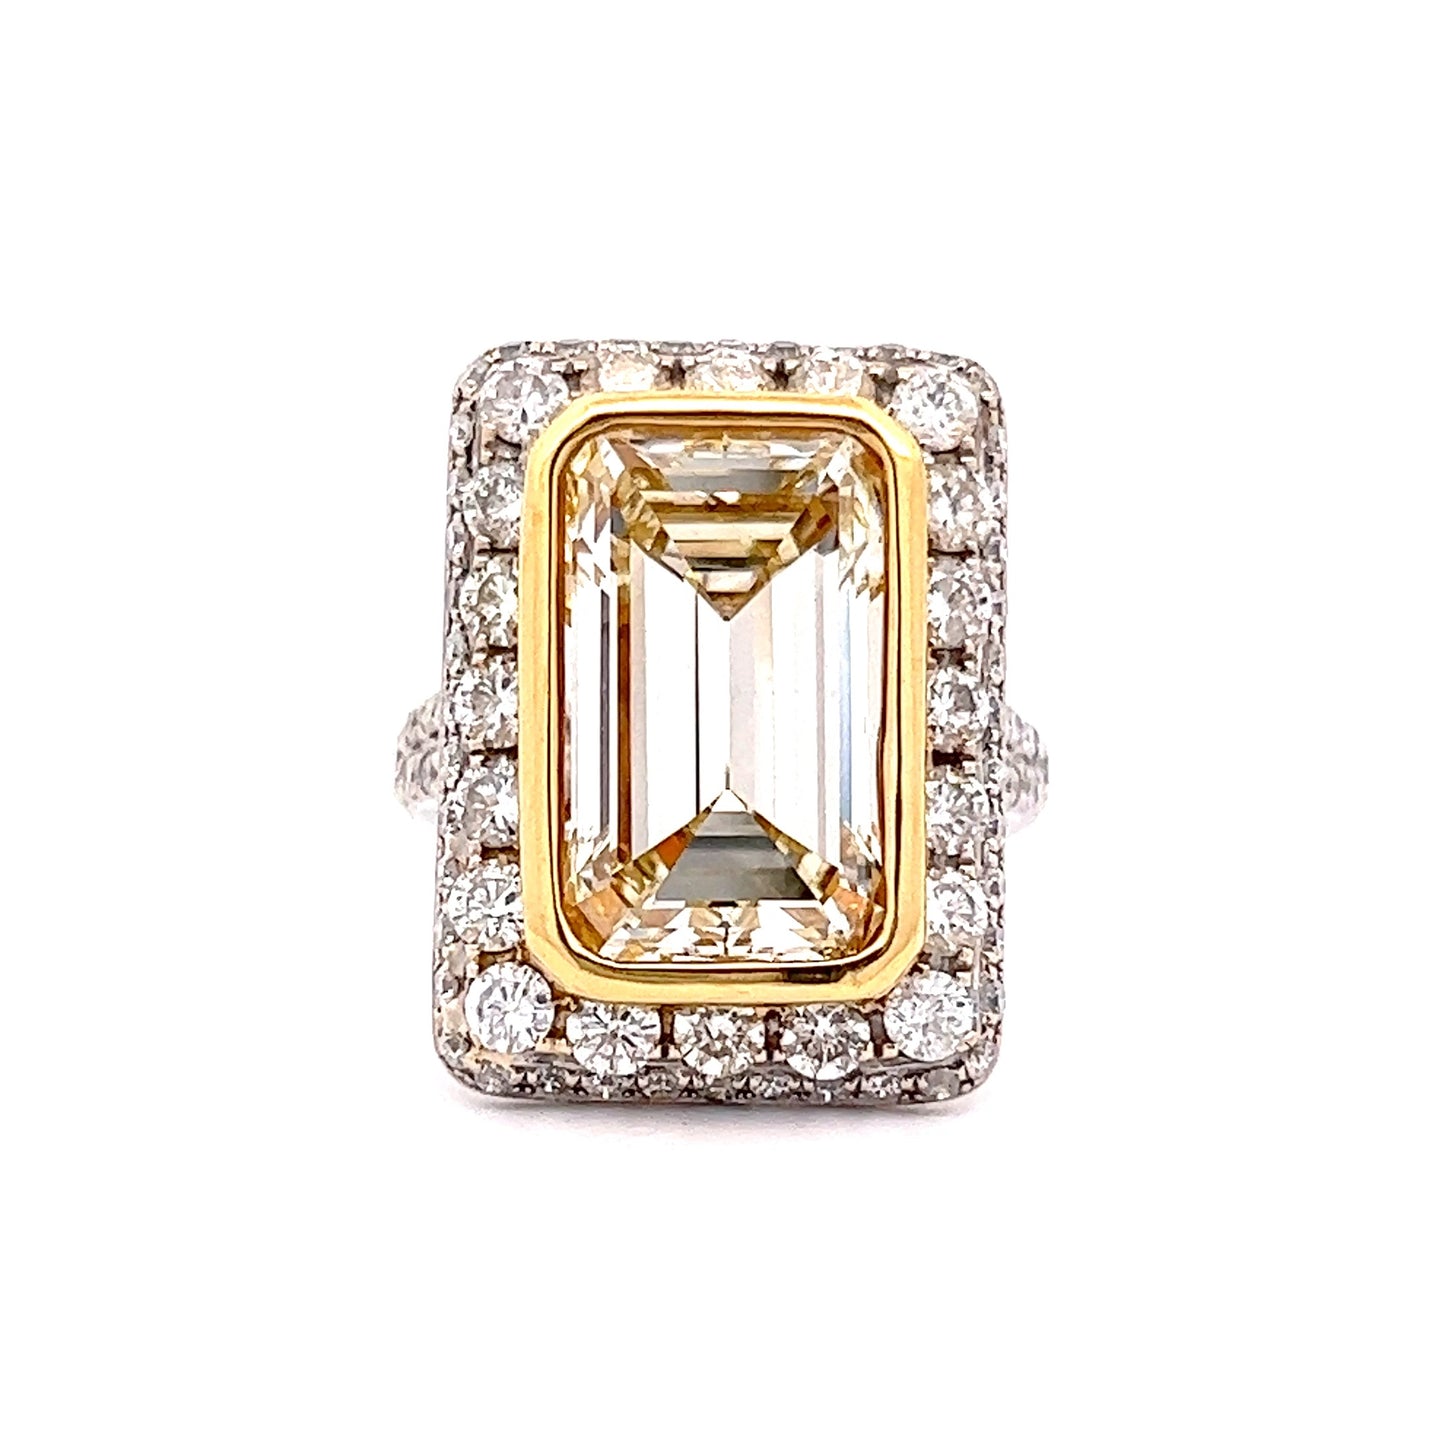 7 Carat Emerald Cut Diamond Engagement Ring in 18k